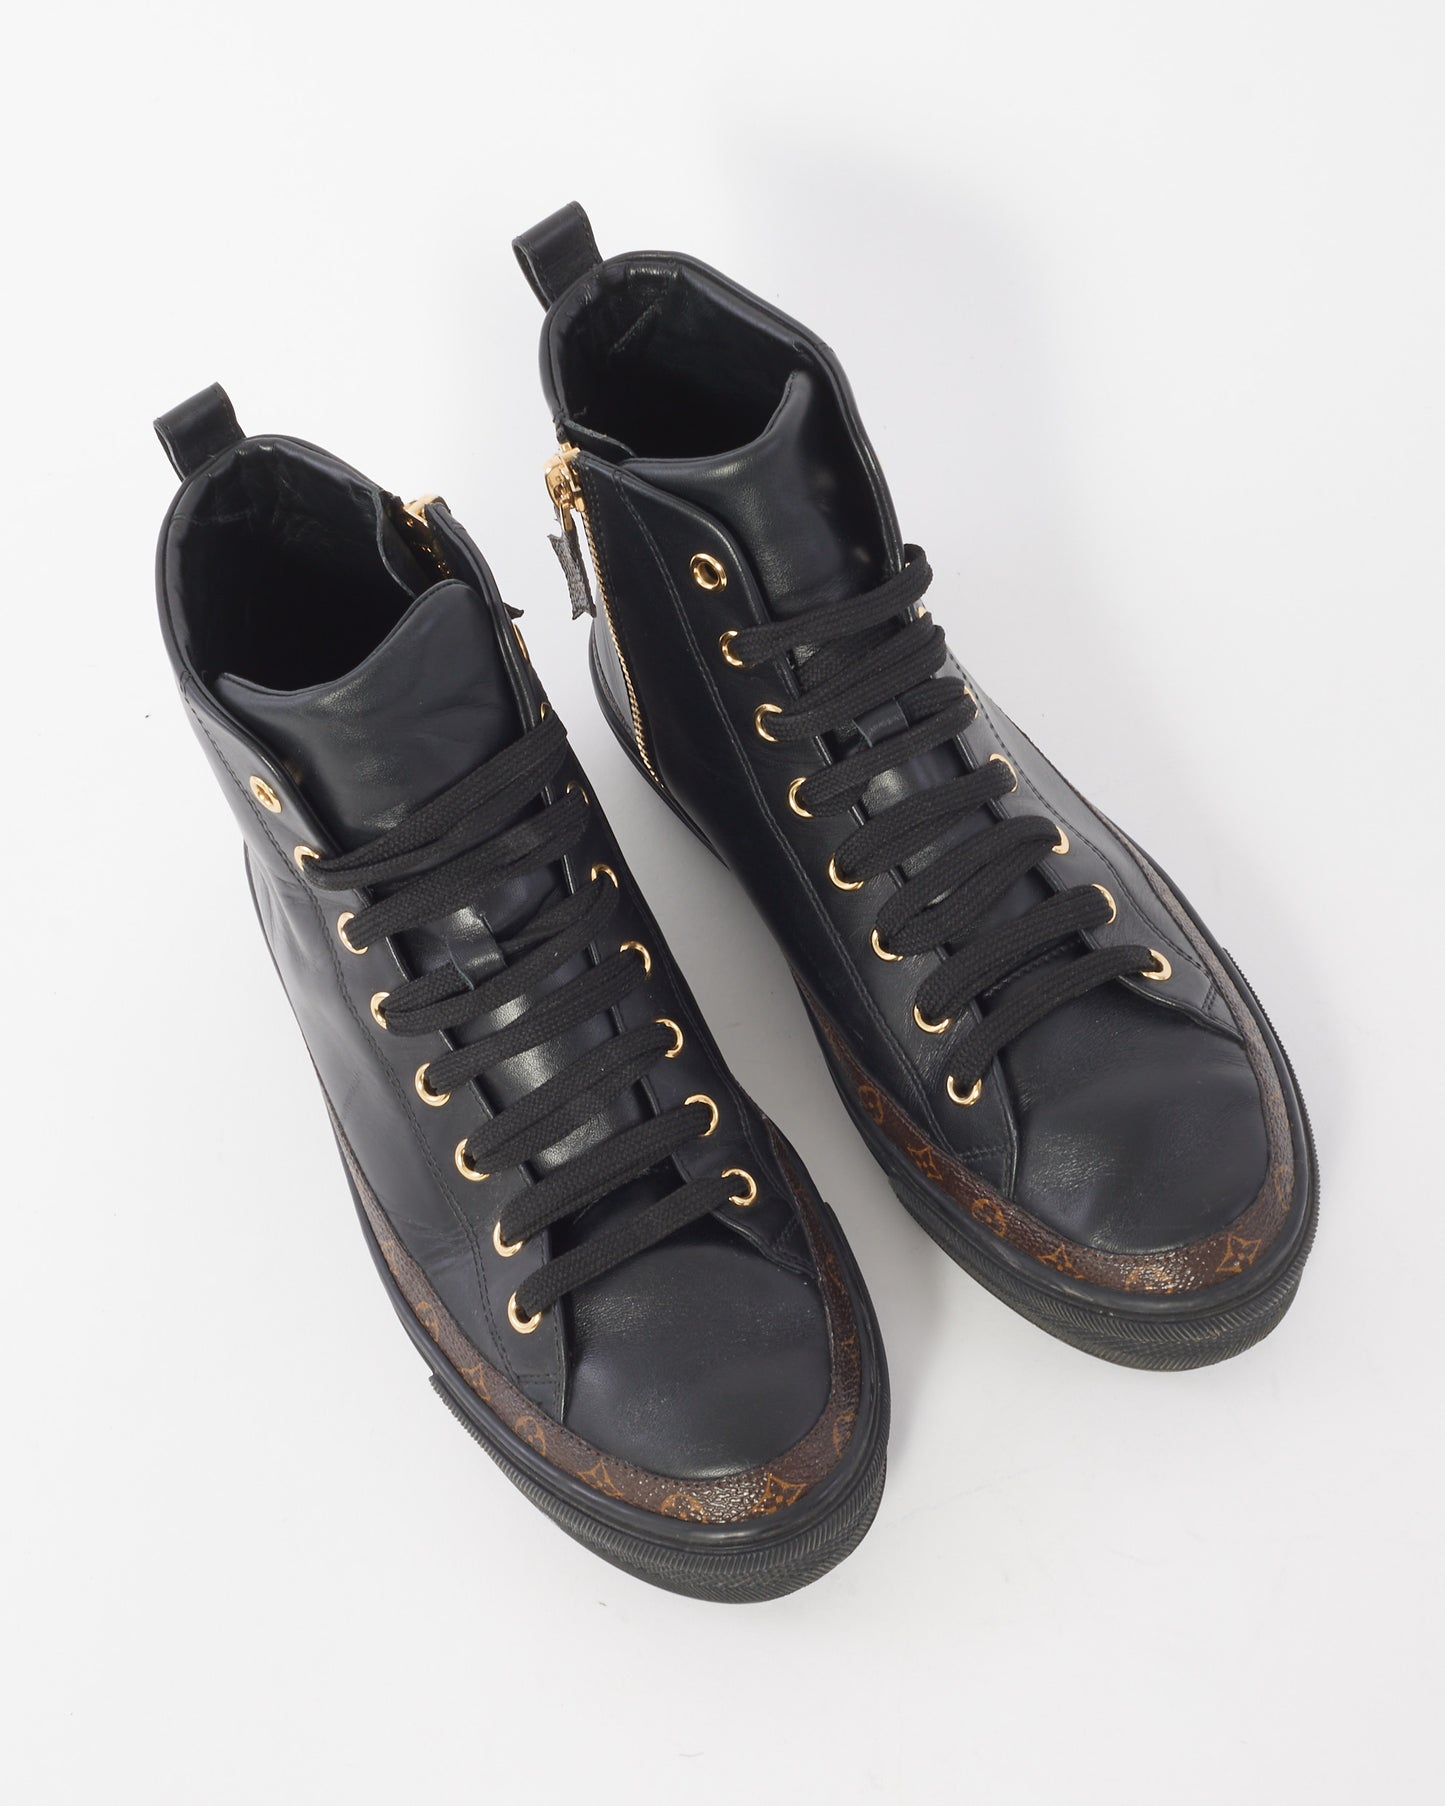 Louis Vuitton Black Leather & Monogram High Top Stellar Sneakers - 37.5